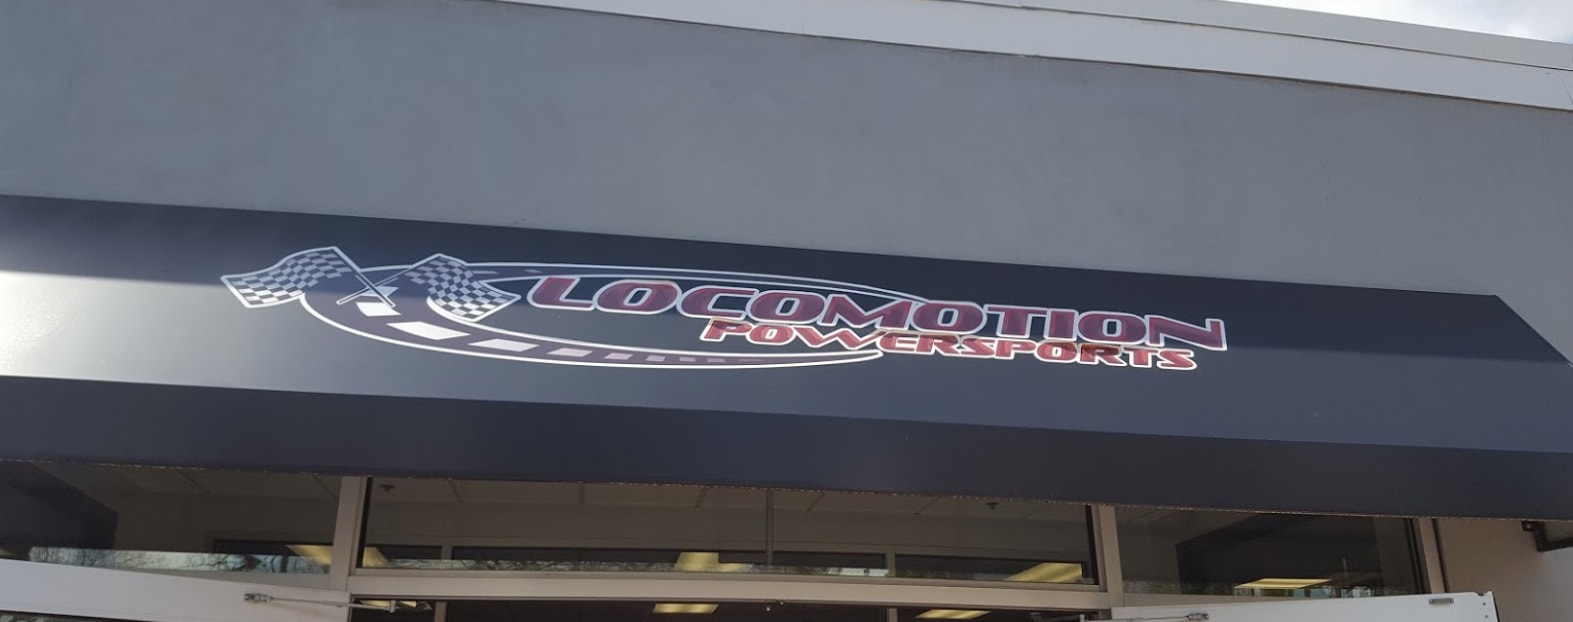 Locomotion Powersports storefront